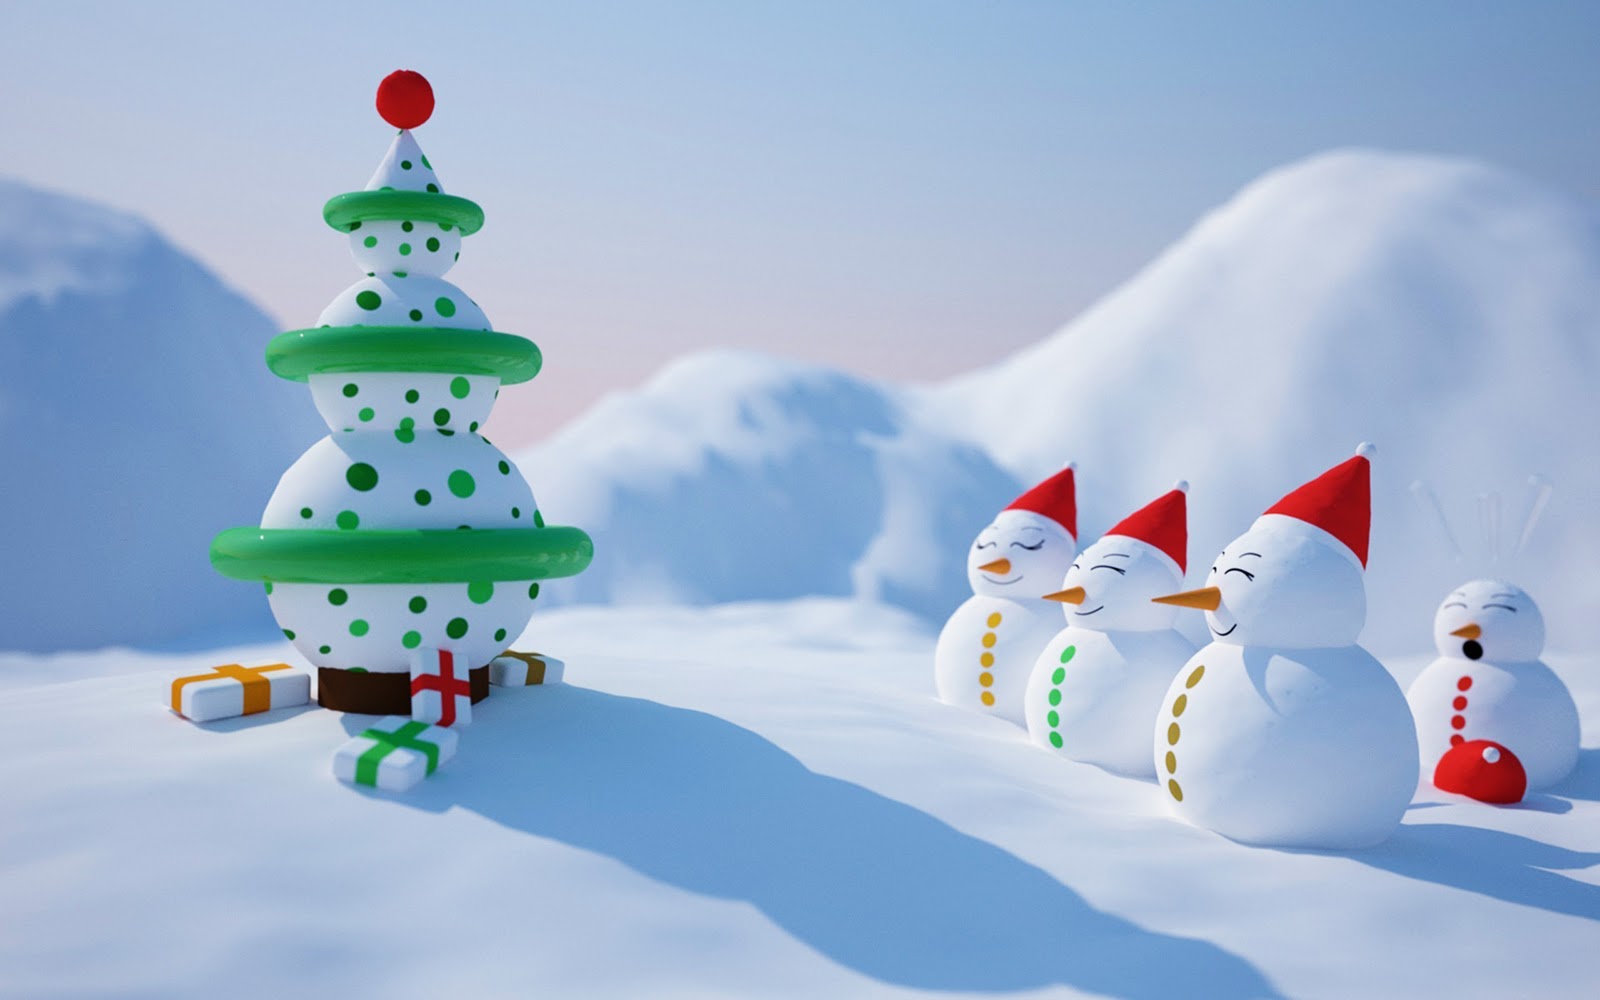 Animated Christmas Desktop Background